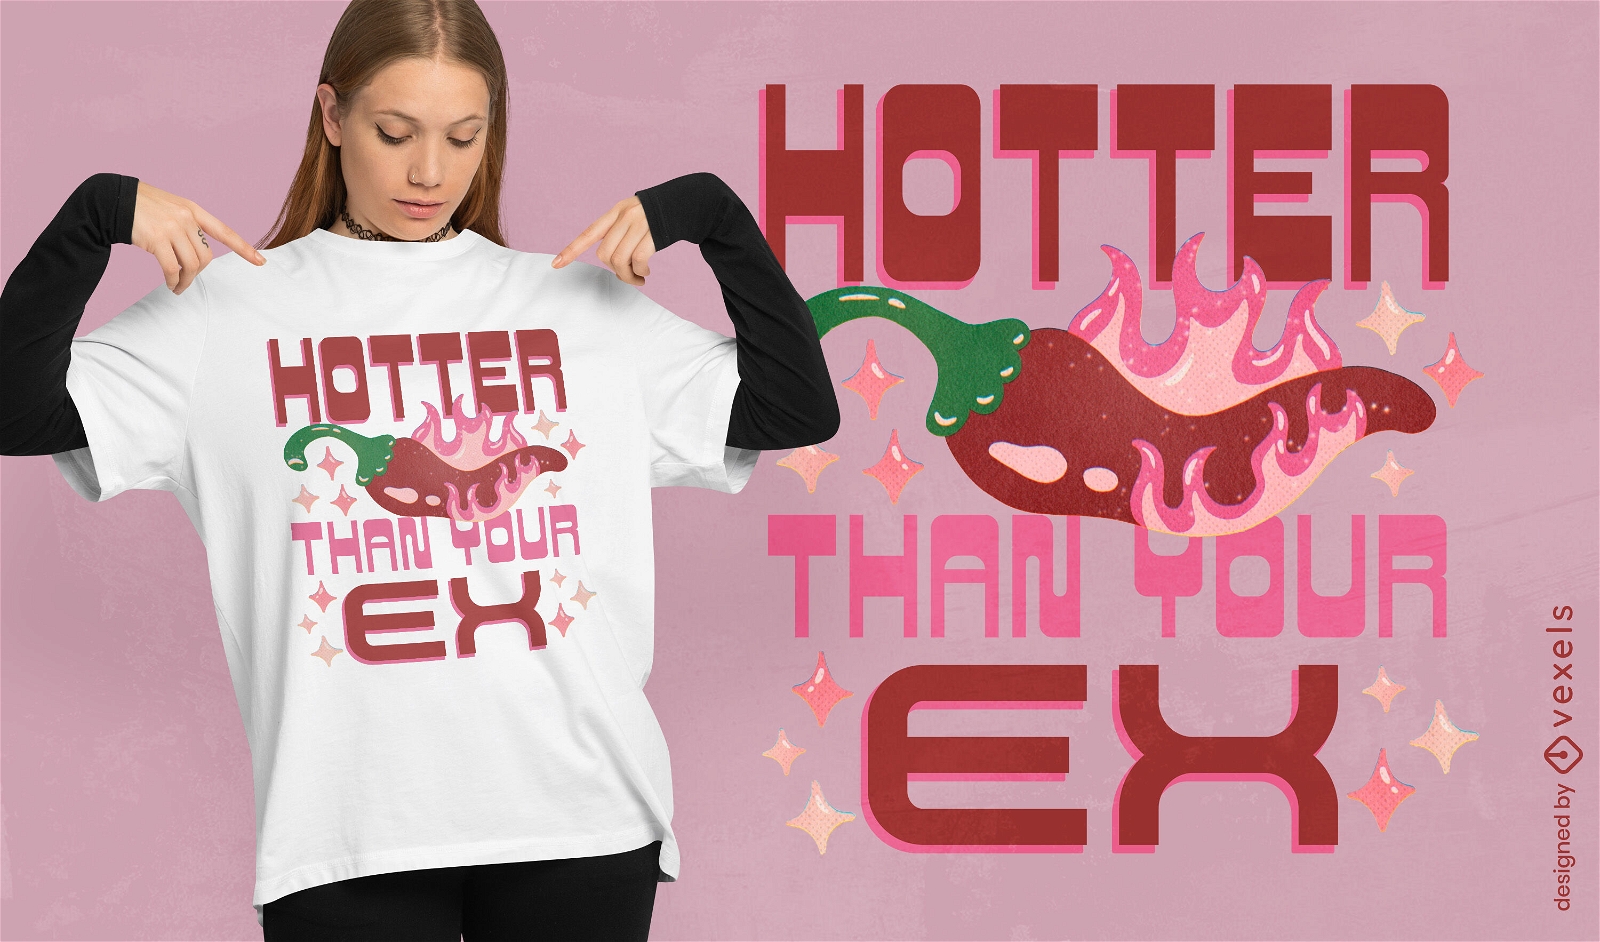 Hotter than your ex t-shirt design